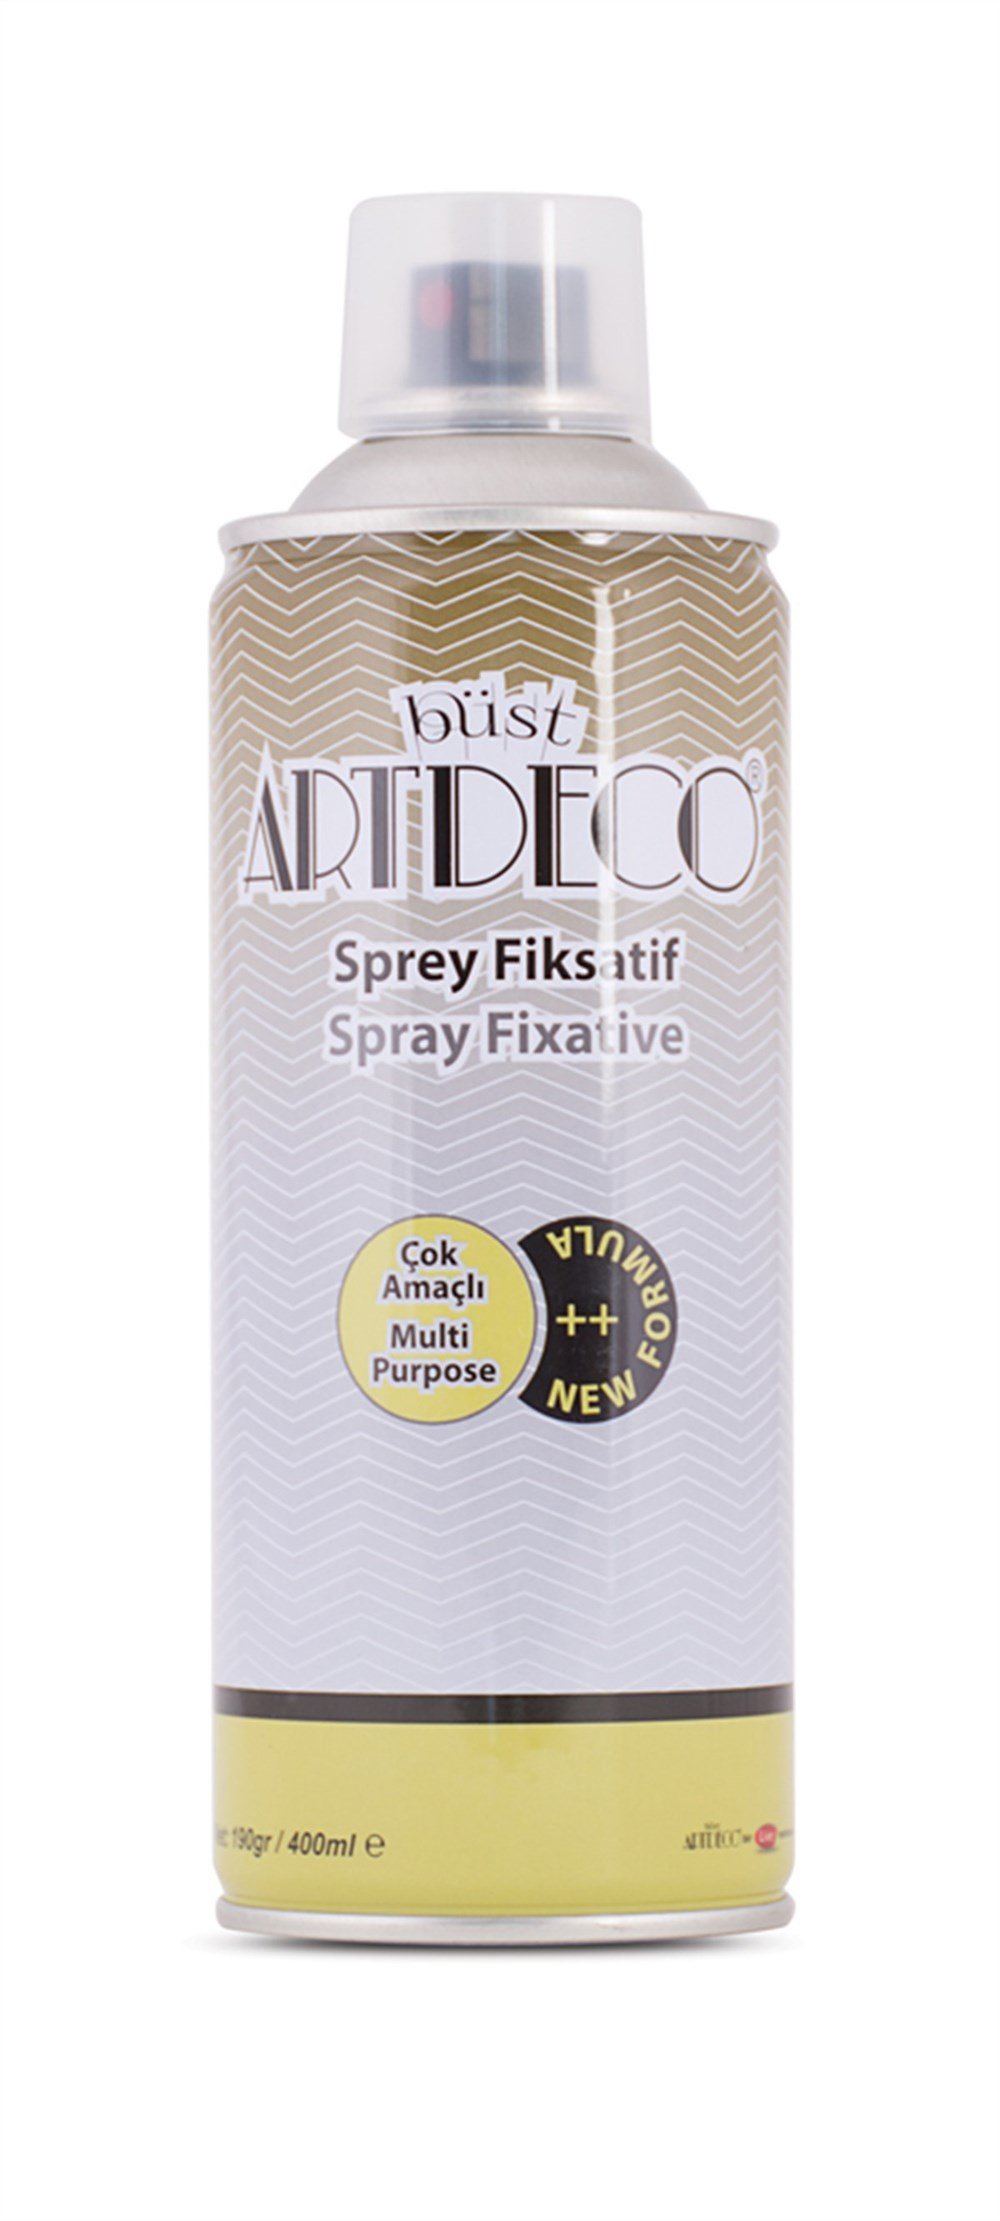 Artdeco Sprey Fiksatif (Spray Fixative) 400ml